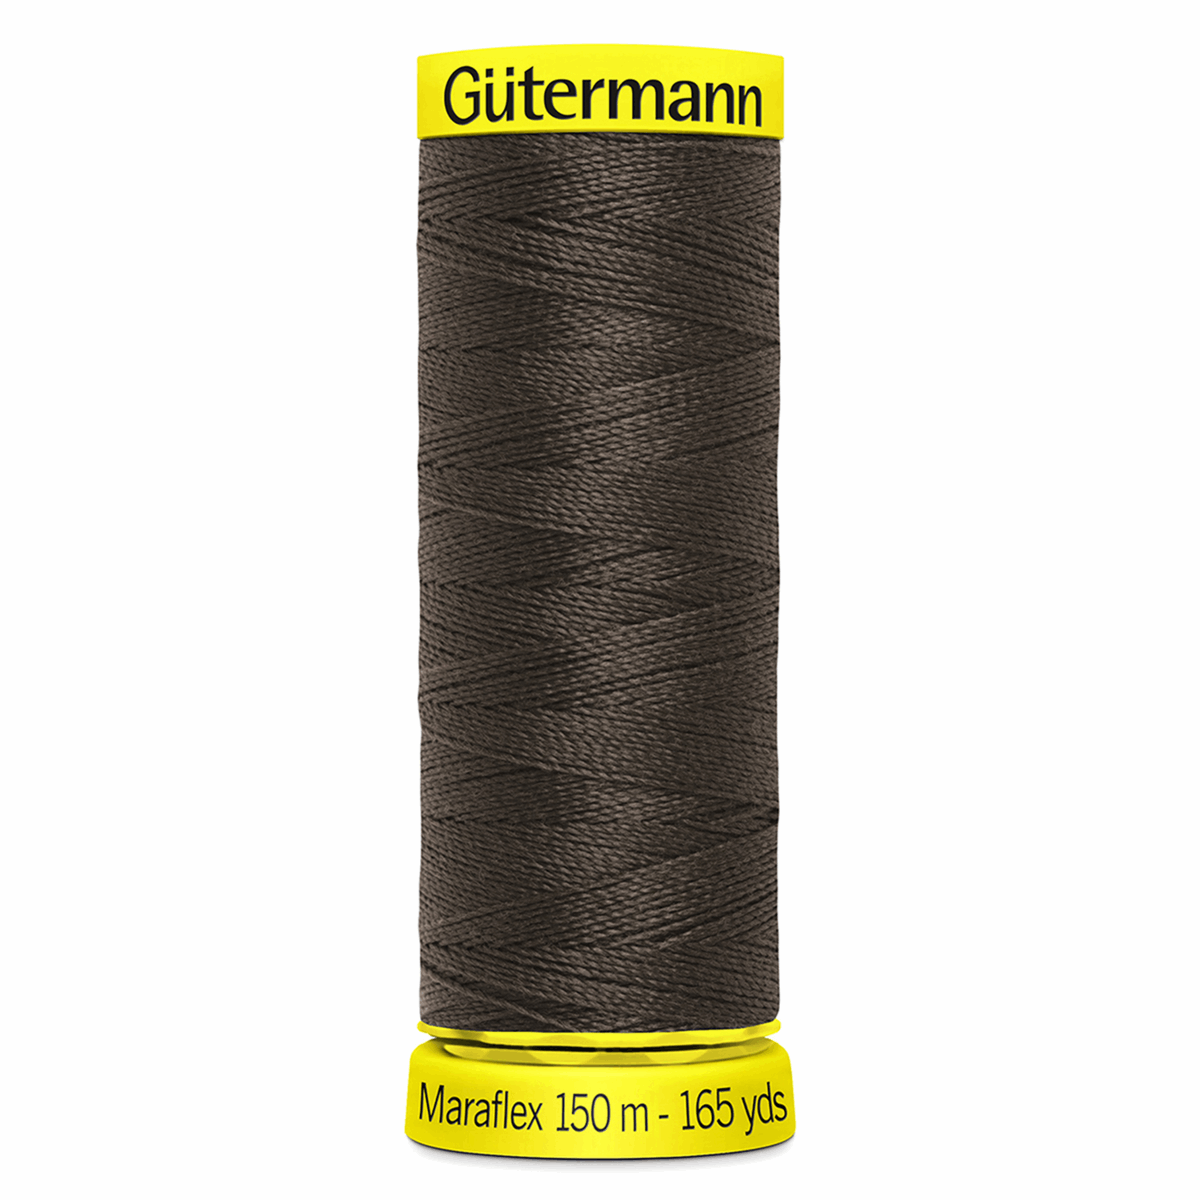 Gutermann Maraflex Elastic Sewing Thread 150m Chocolate 696